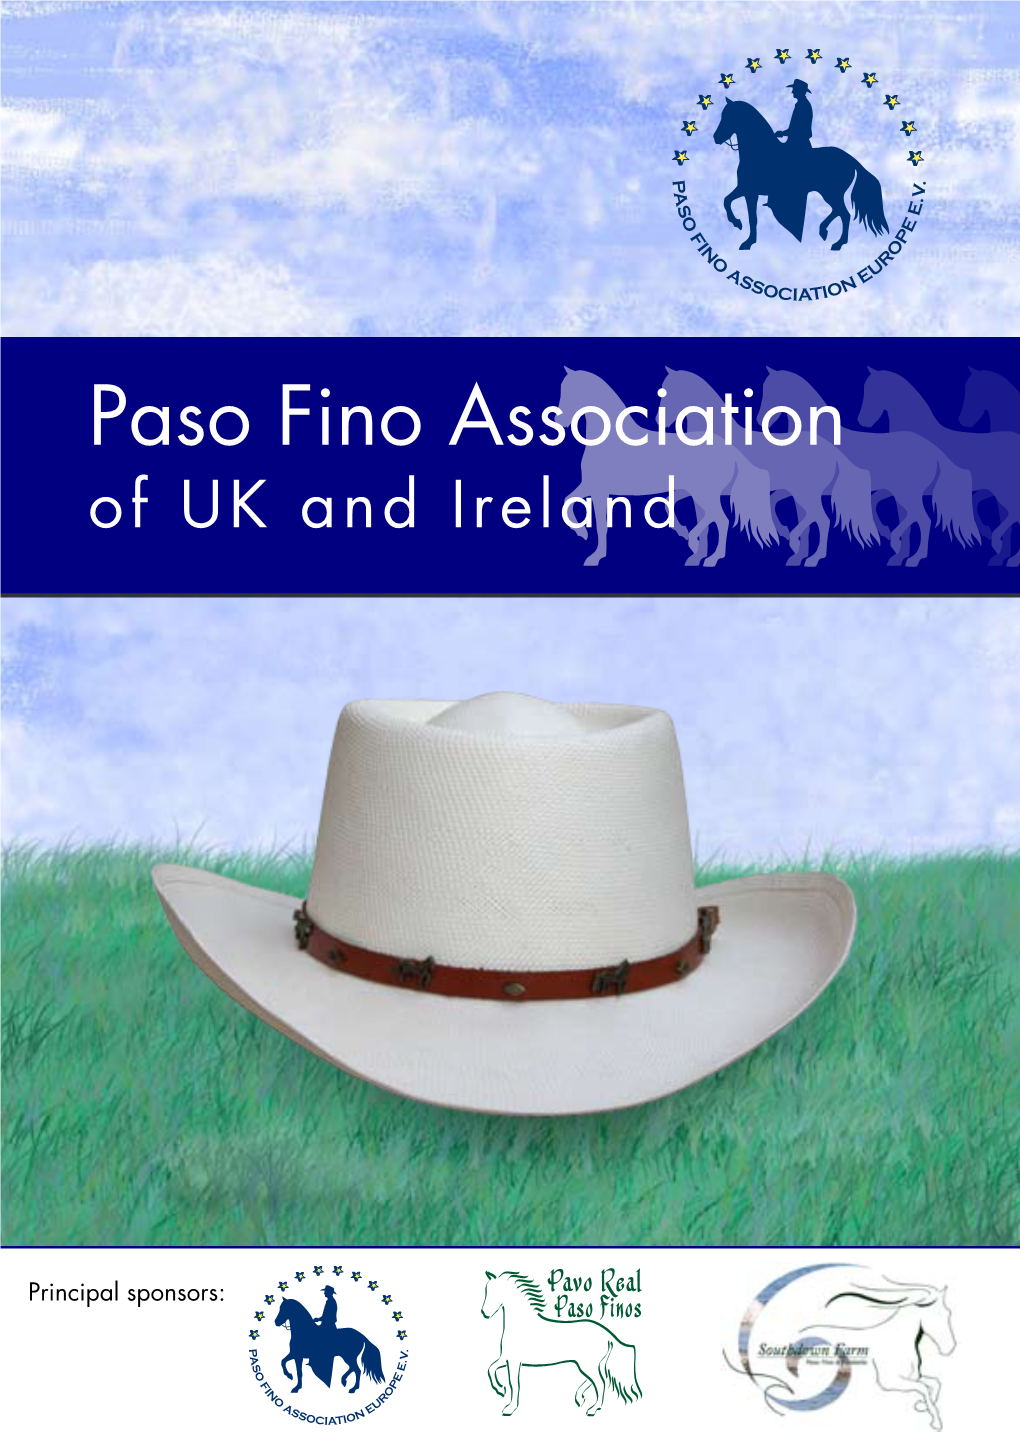 Paso Fino Association of UK and Ireland